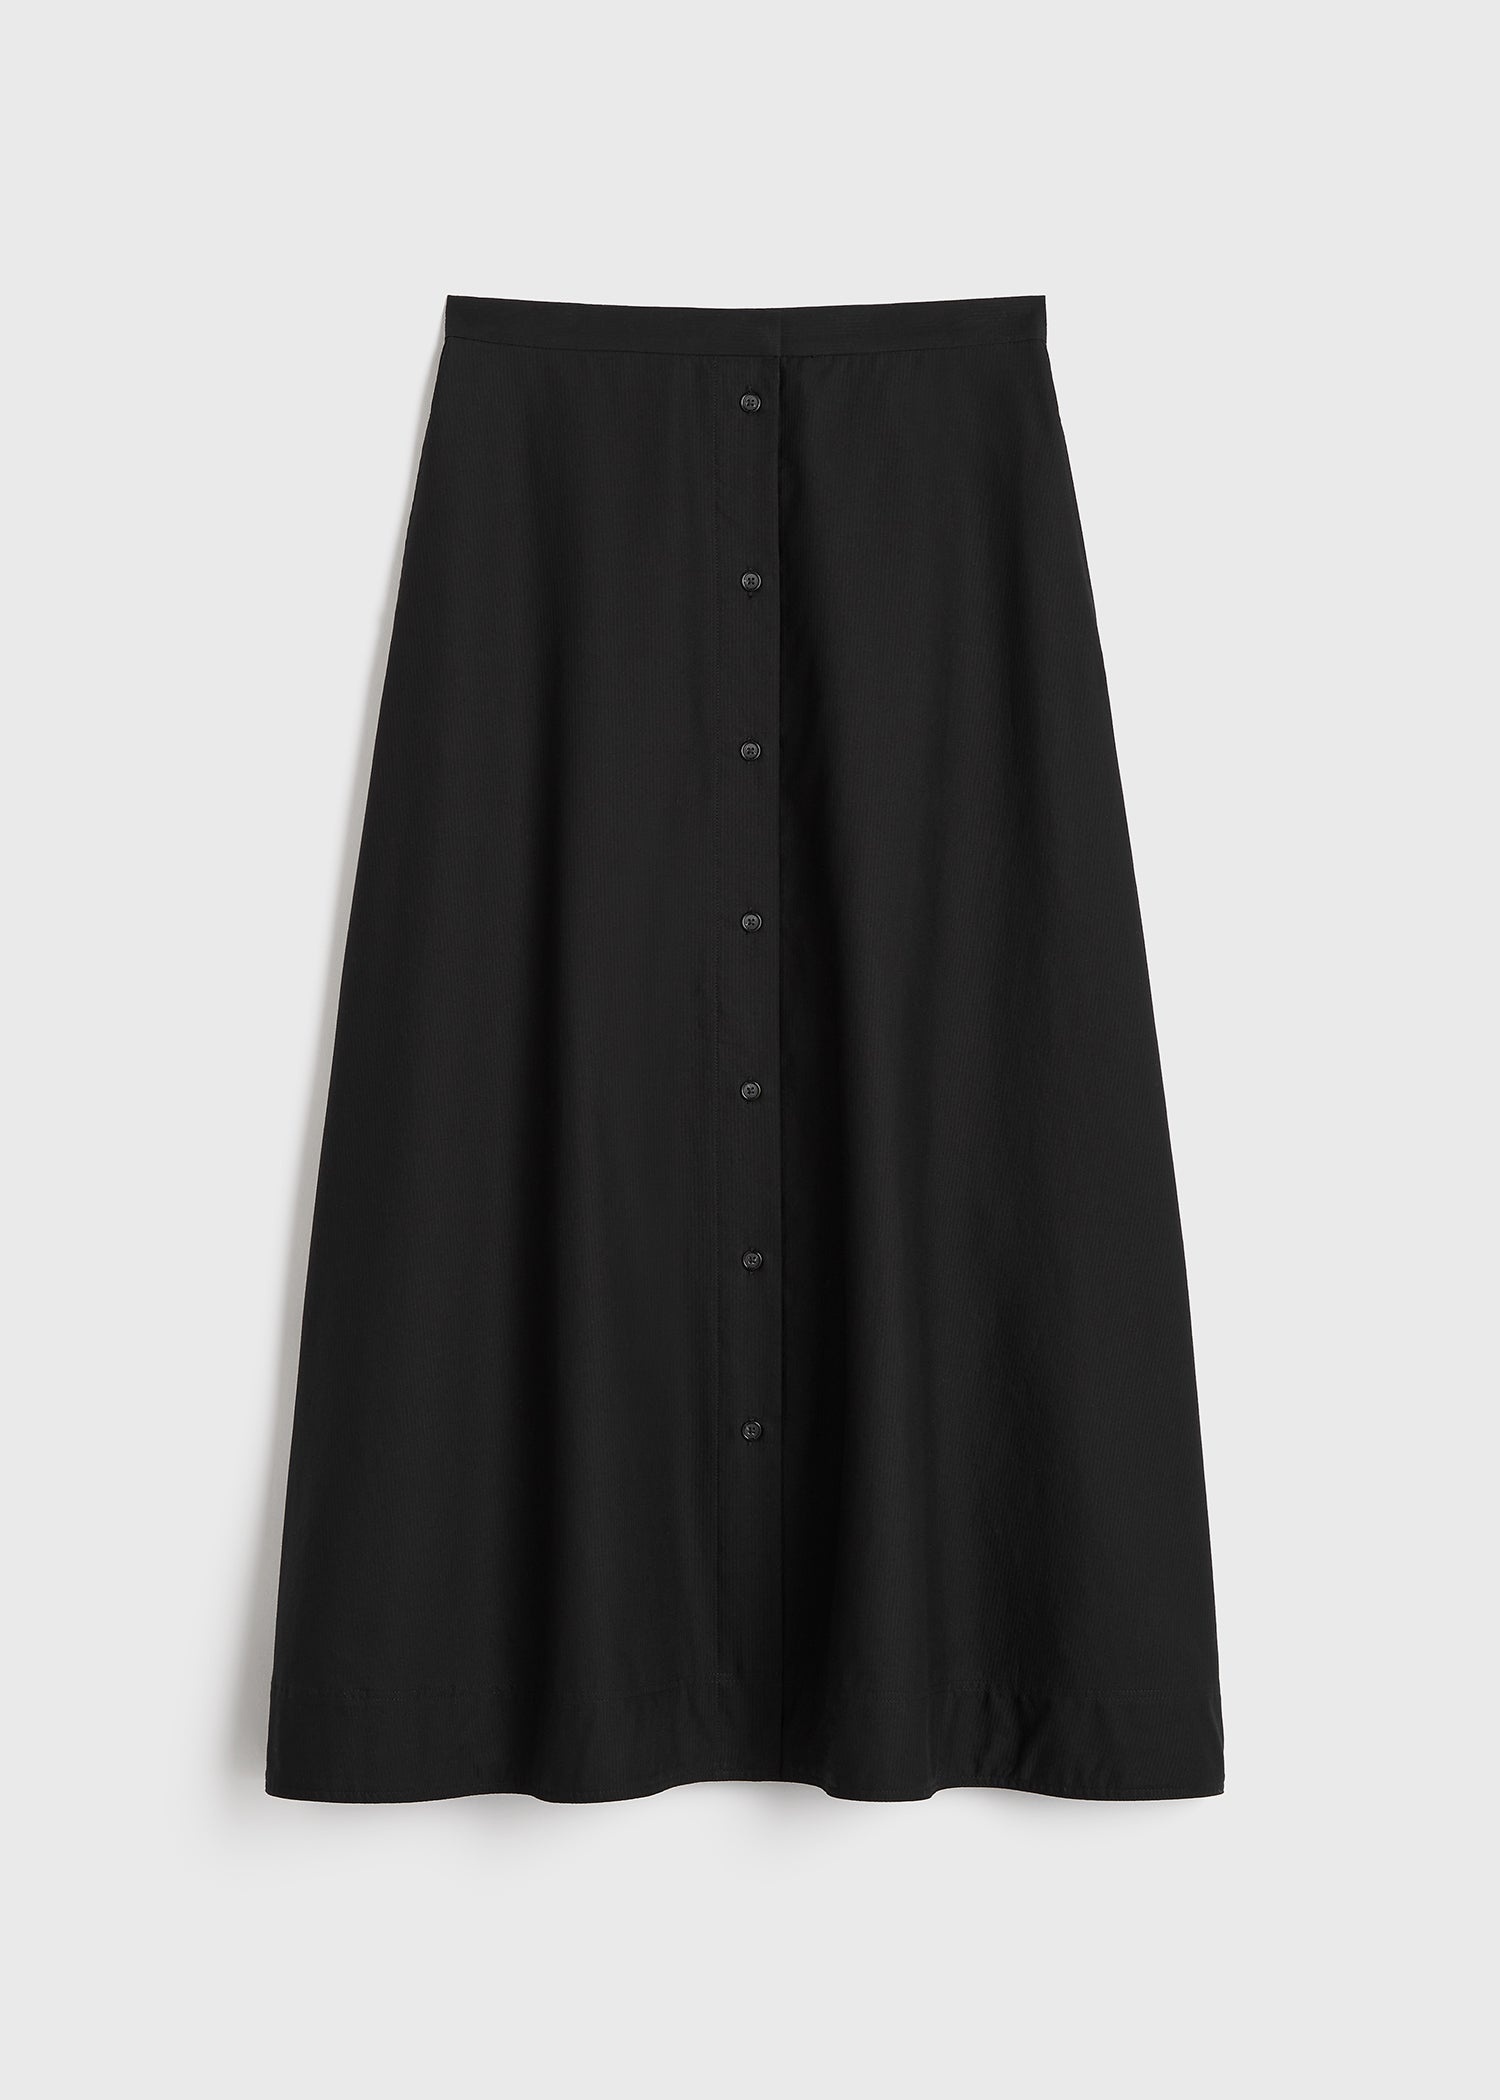 Jacquard stripe skirt black - 1